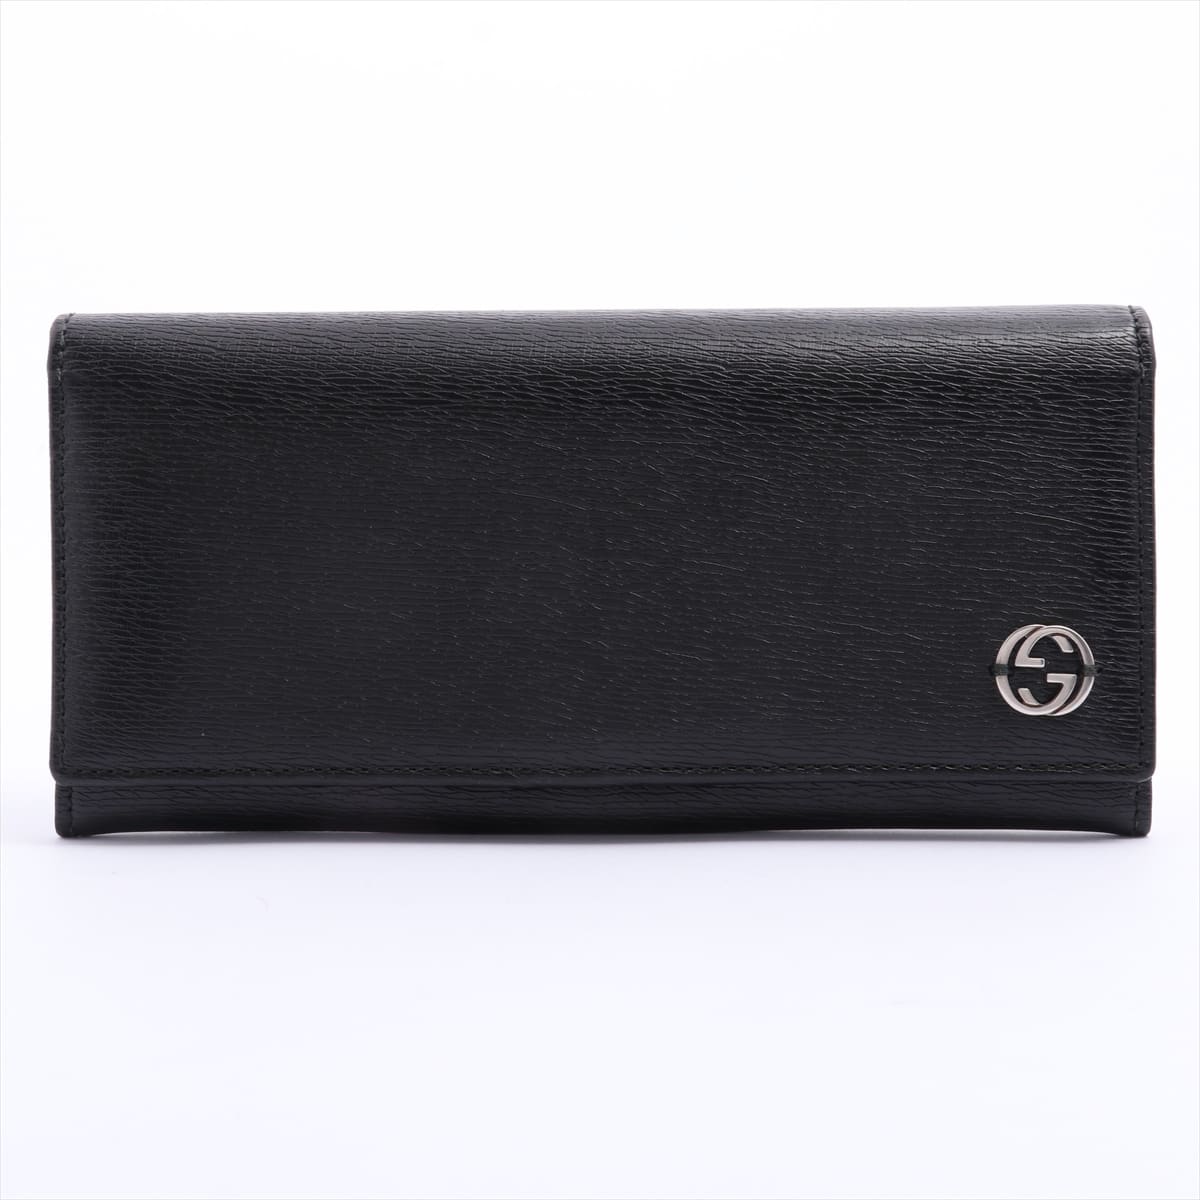 Gucci Interlocking G 256348 Leather Wallet Black